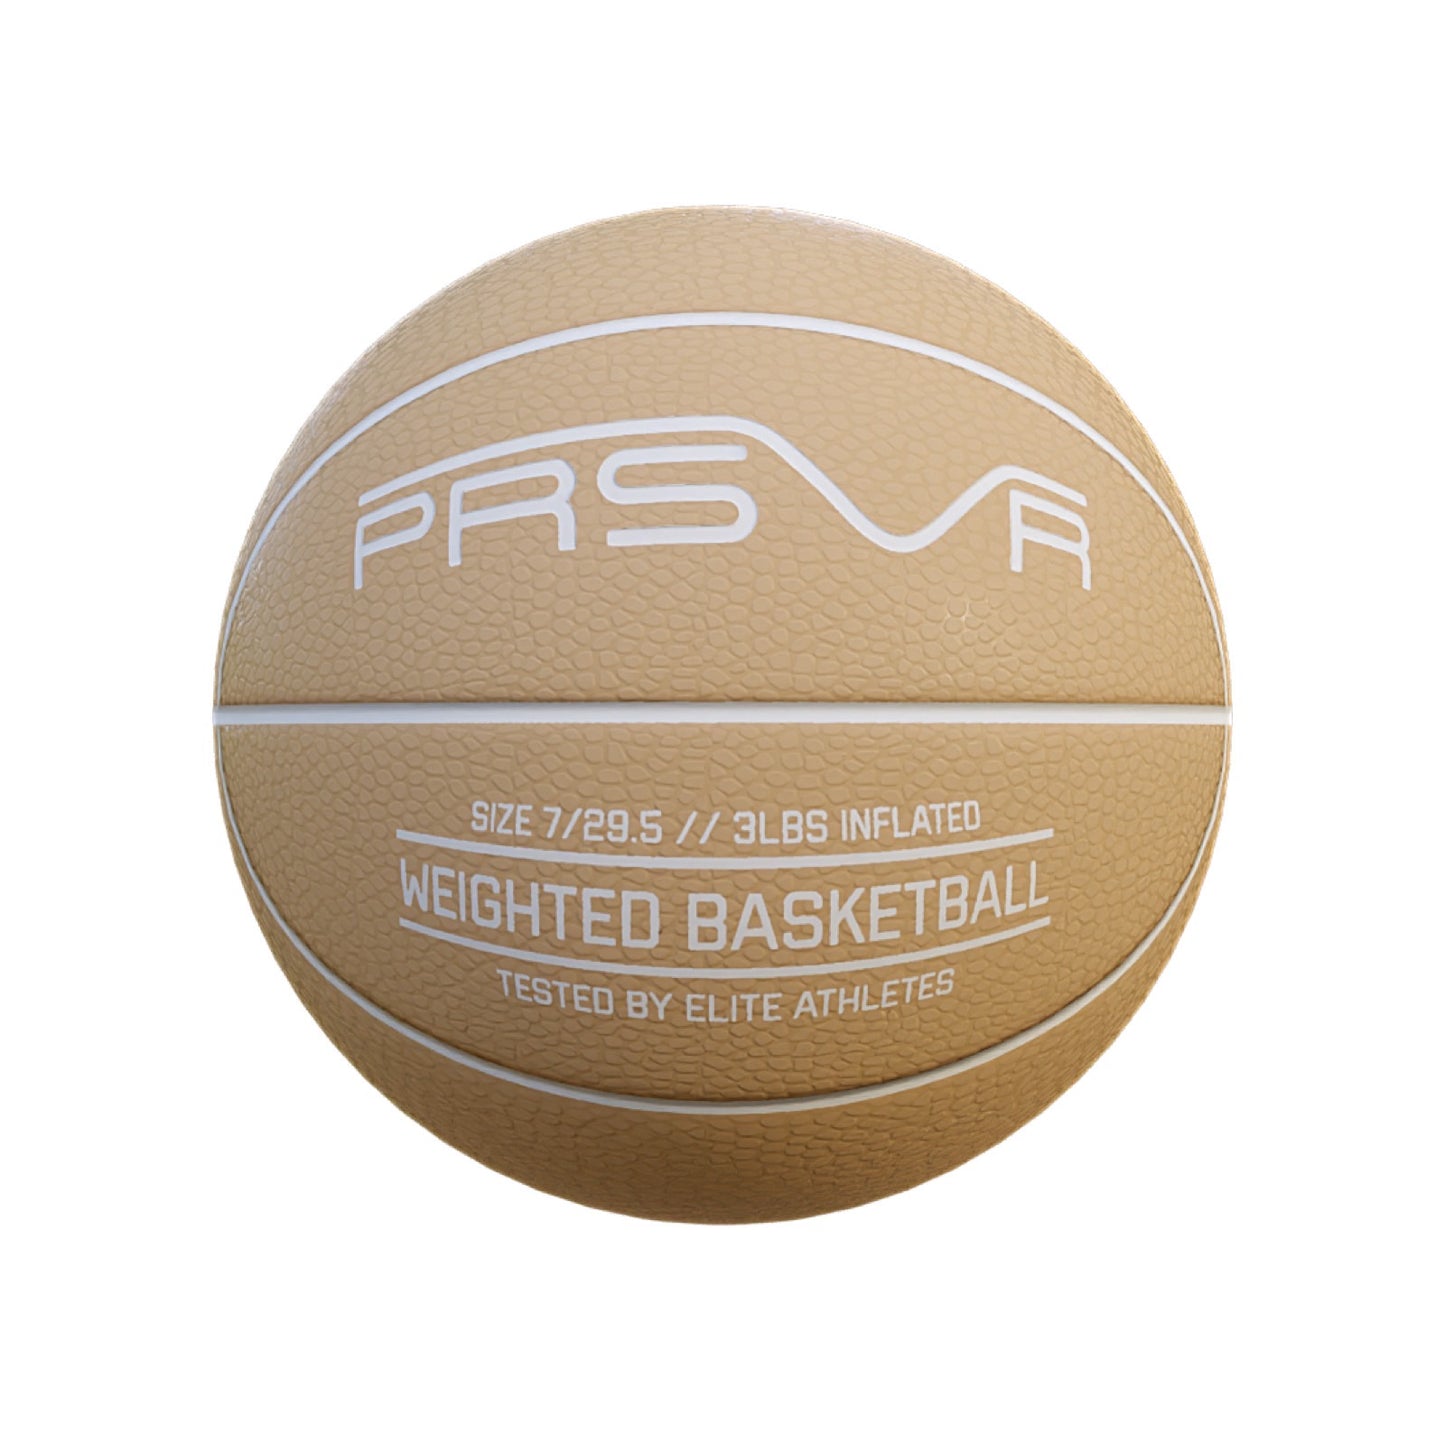 The PRSVR Basketball